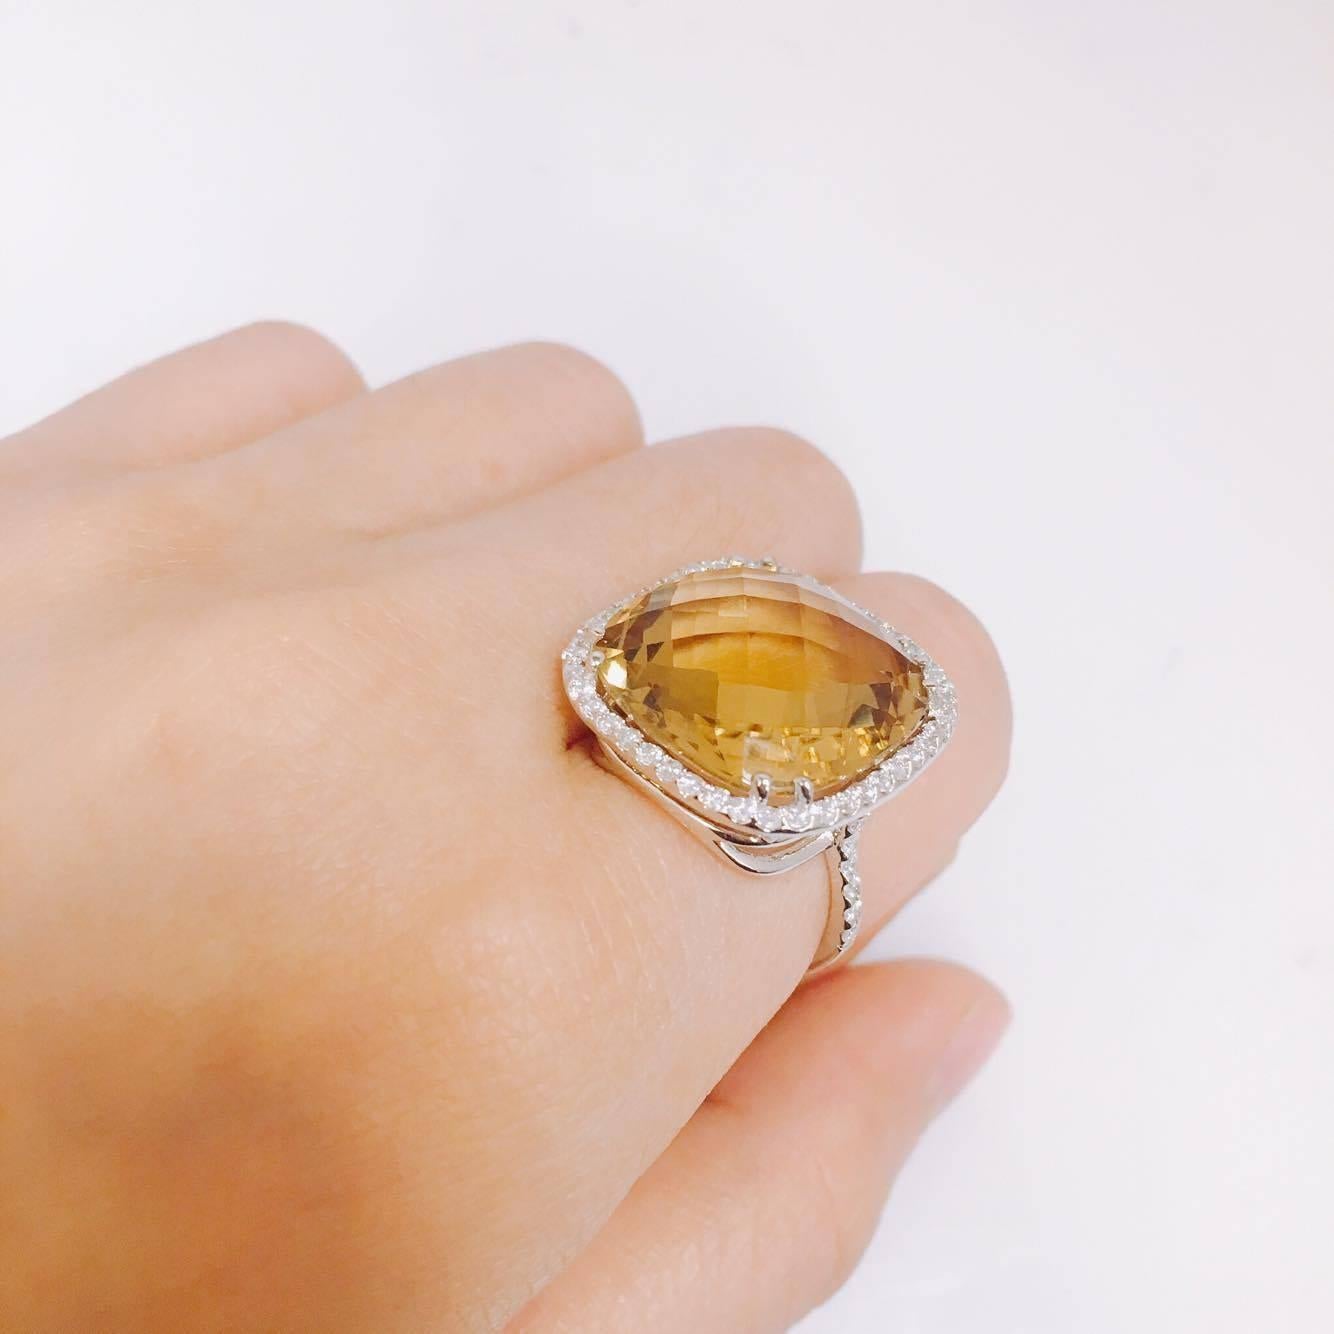 19 carat diamond ring